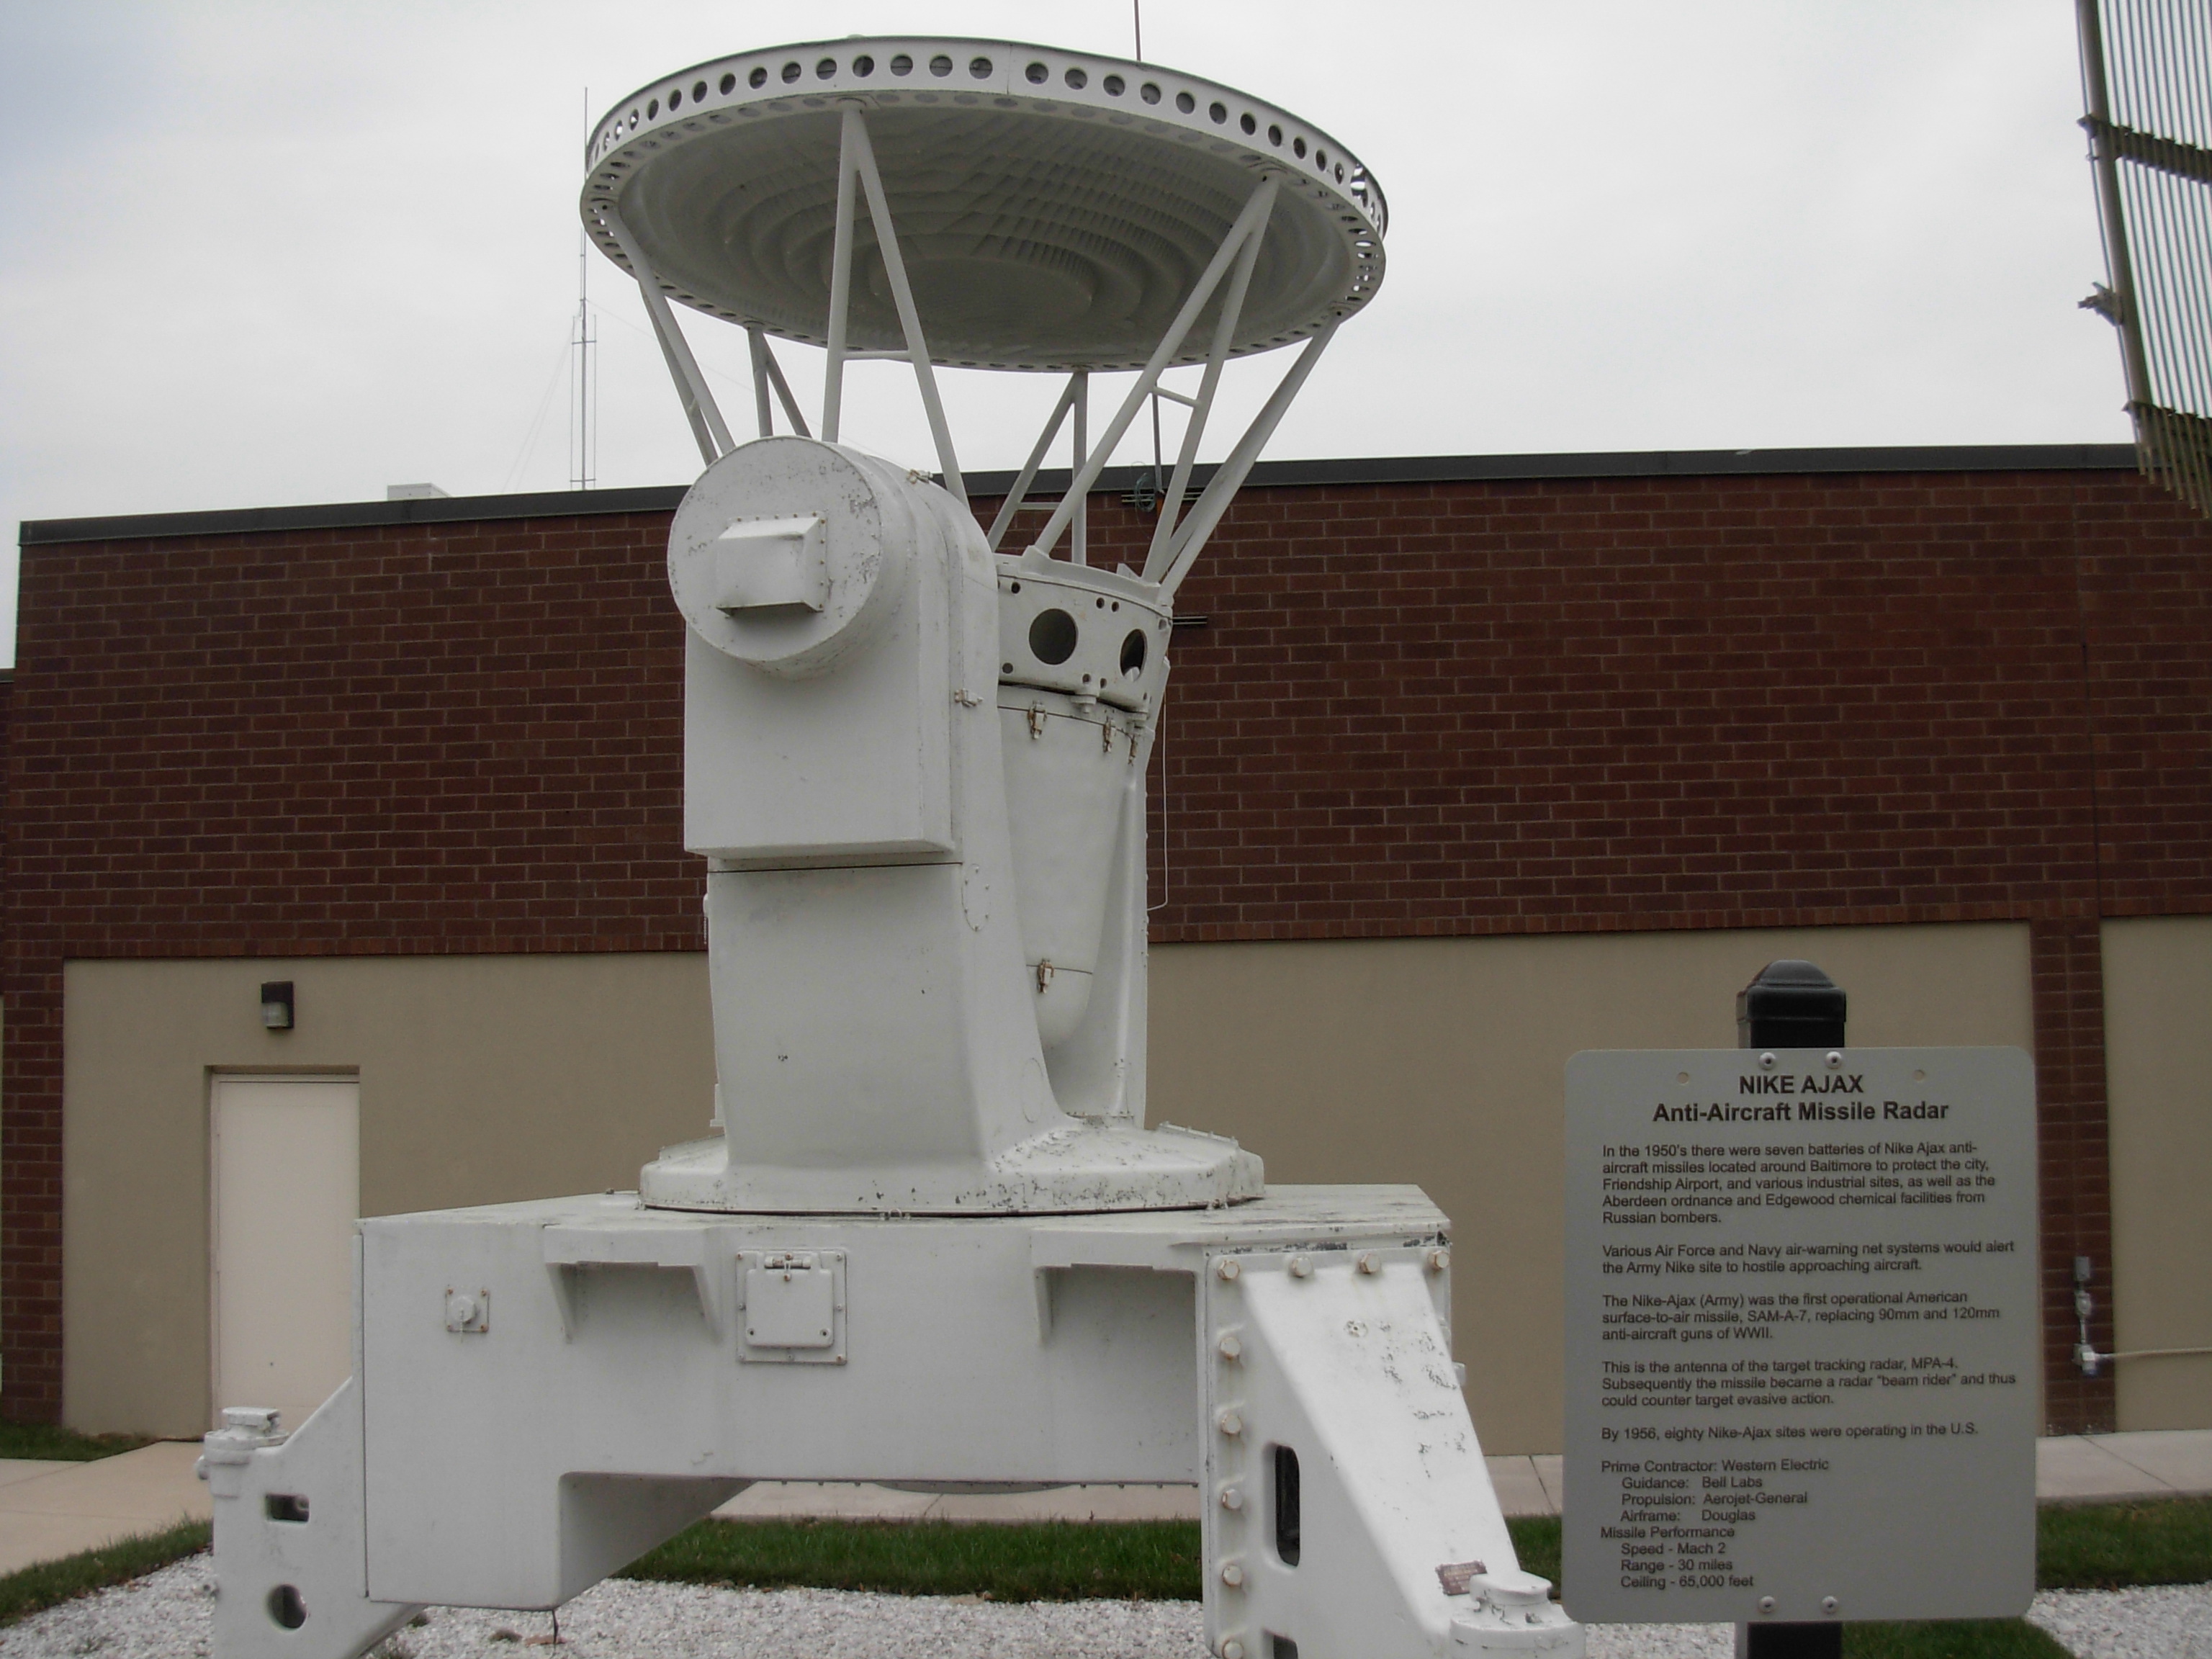 File:NIKE AJAX Anti-Aircraft Missile Radar2.jpg - Wikimedia Commons